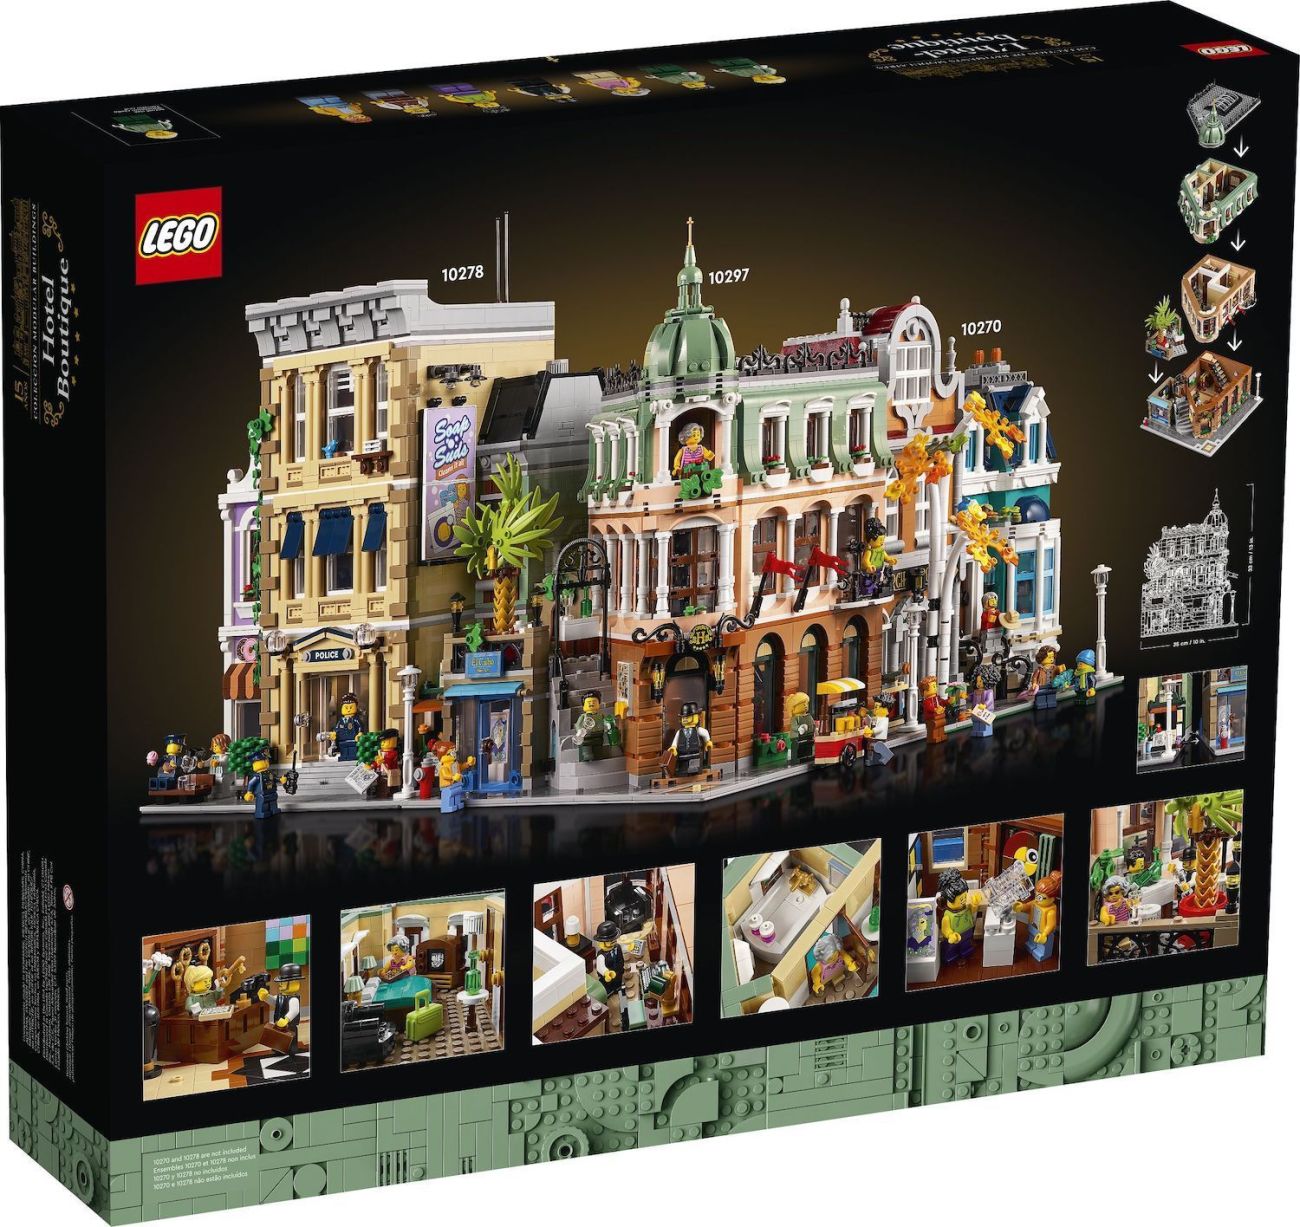 LEGO-Creator-Expert-10297-Boutique-Hotel-10.jpg